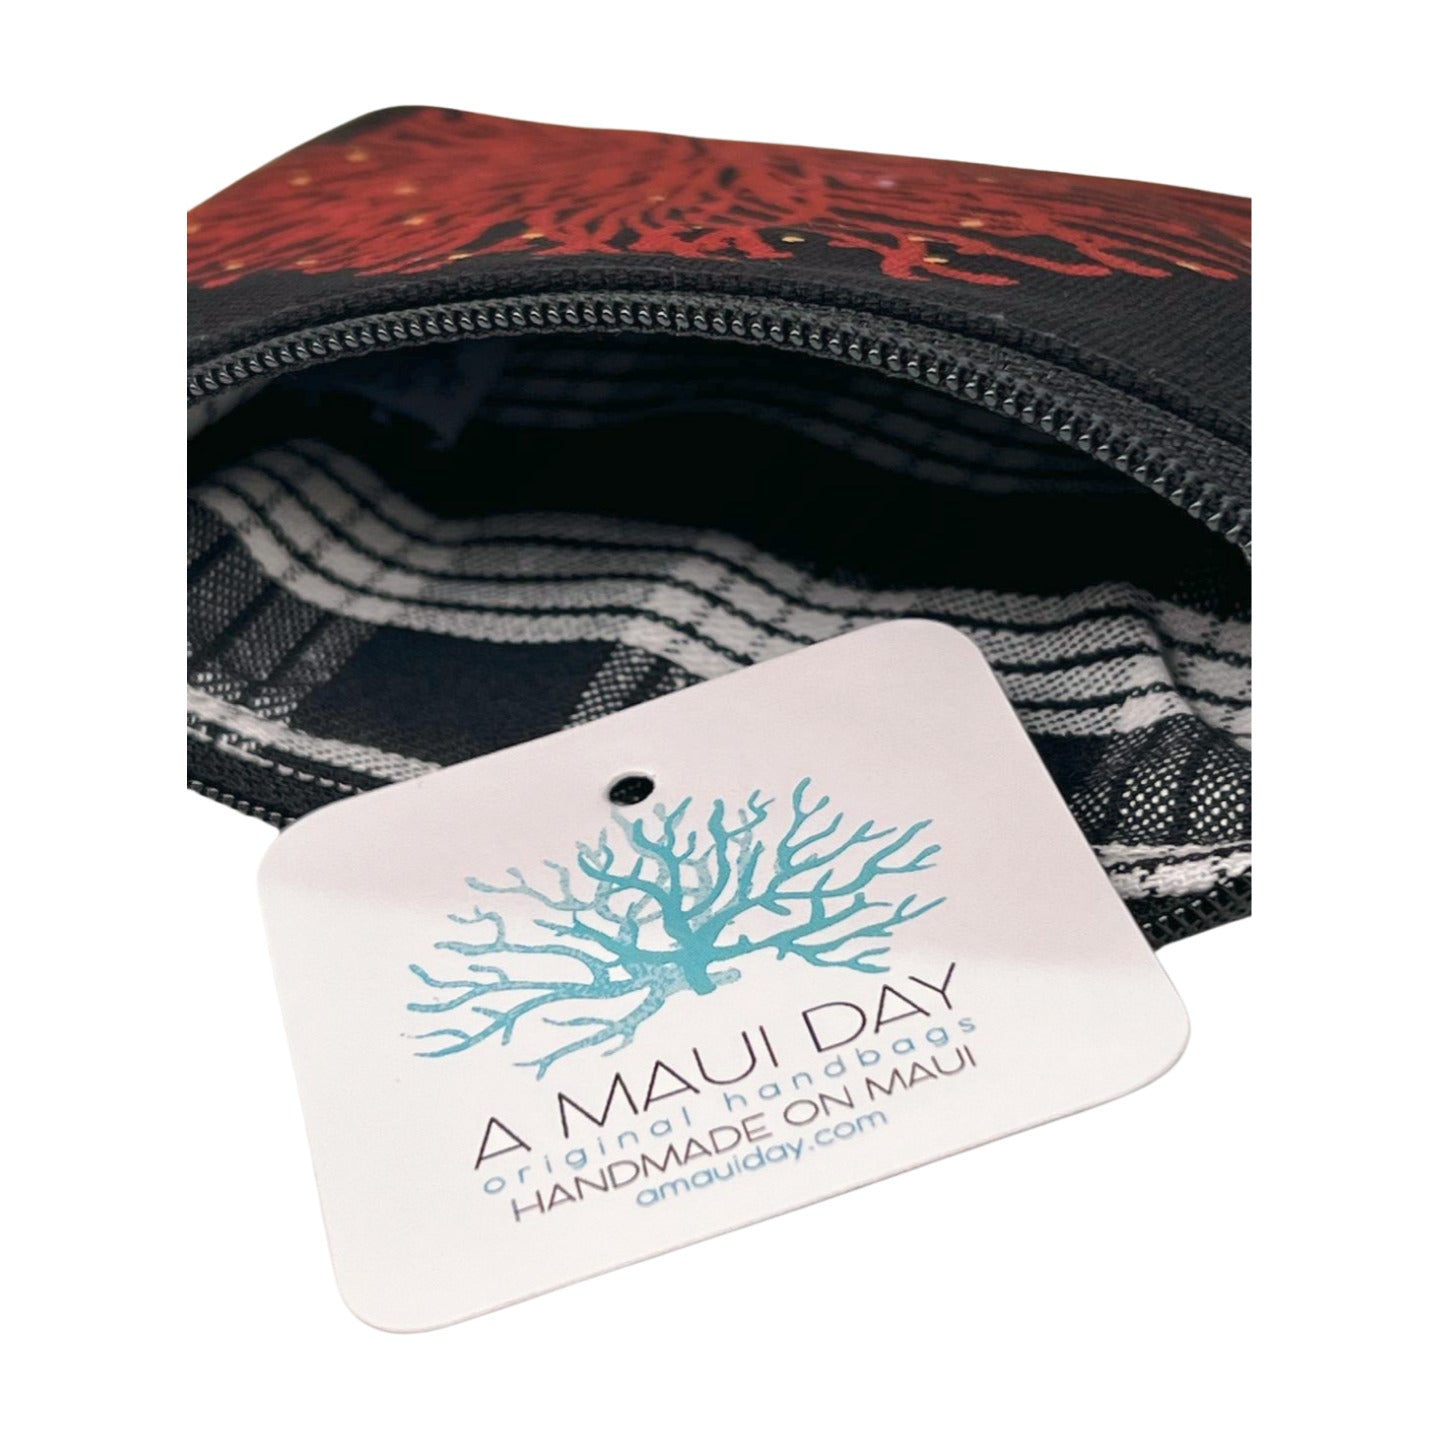 Pop-Up Mākeke - A Maui Day Original Handbags - Handprinted Mini Handbag - Red ‘Ohi’a on Black Canvas - Inside